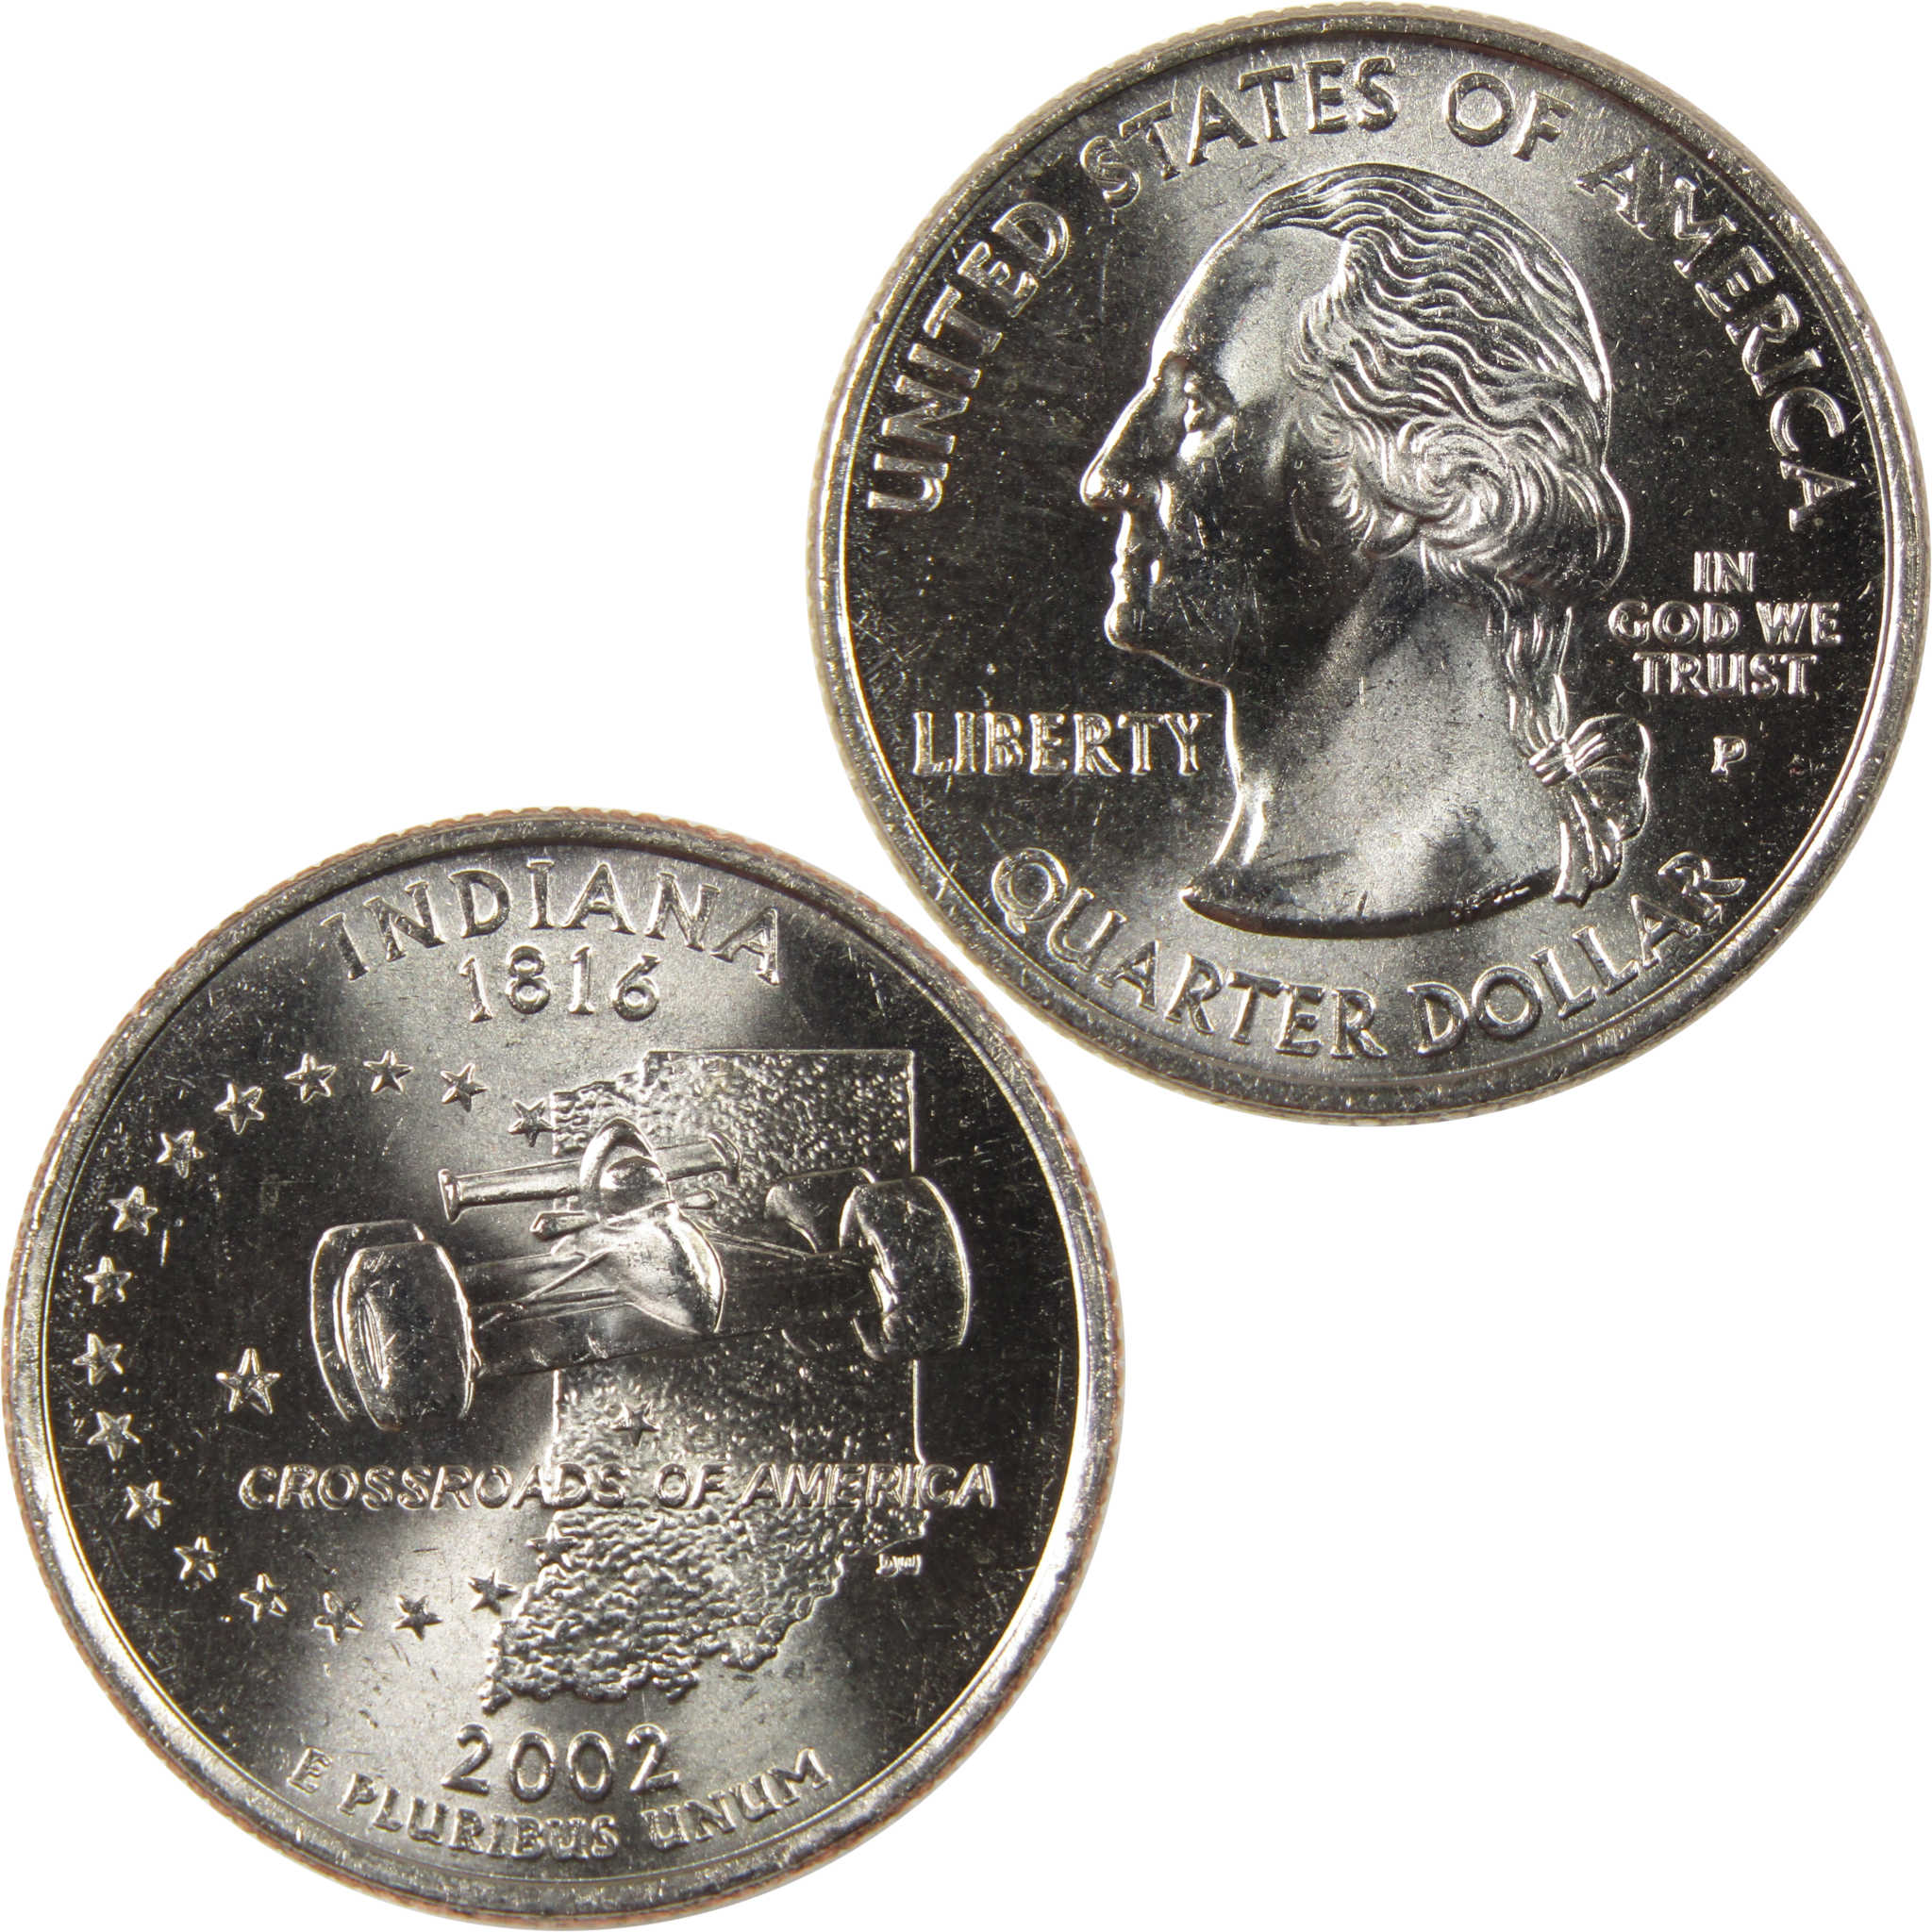 2002 P Indiana State Quarter BU Uncirculated Clad 25c Coin